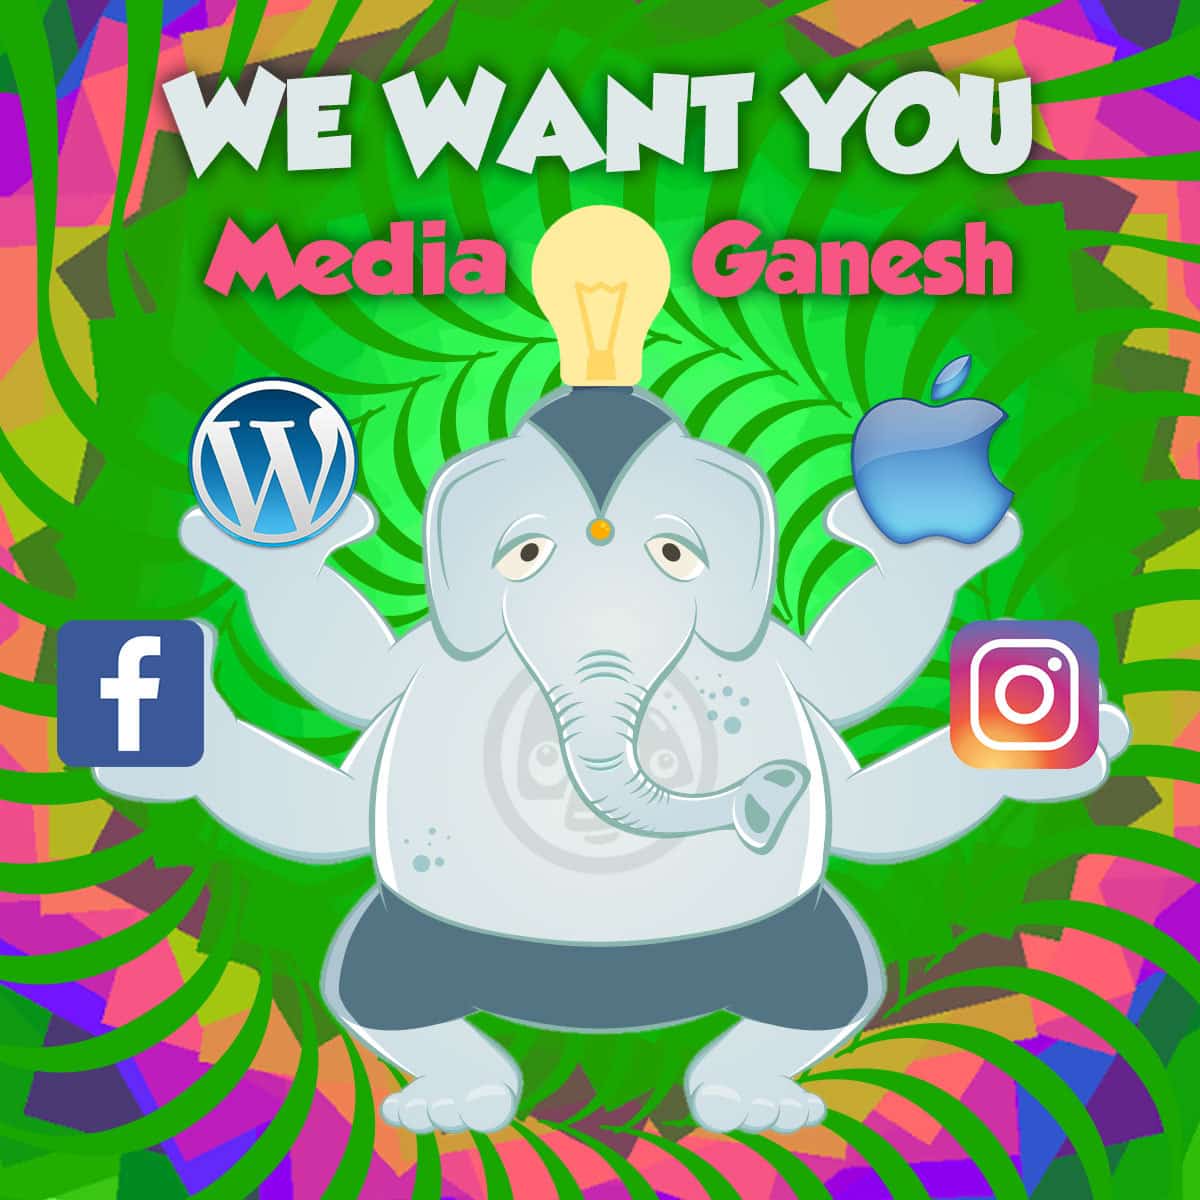 Wanted: Media Ganesh for mushroom magazine